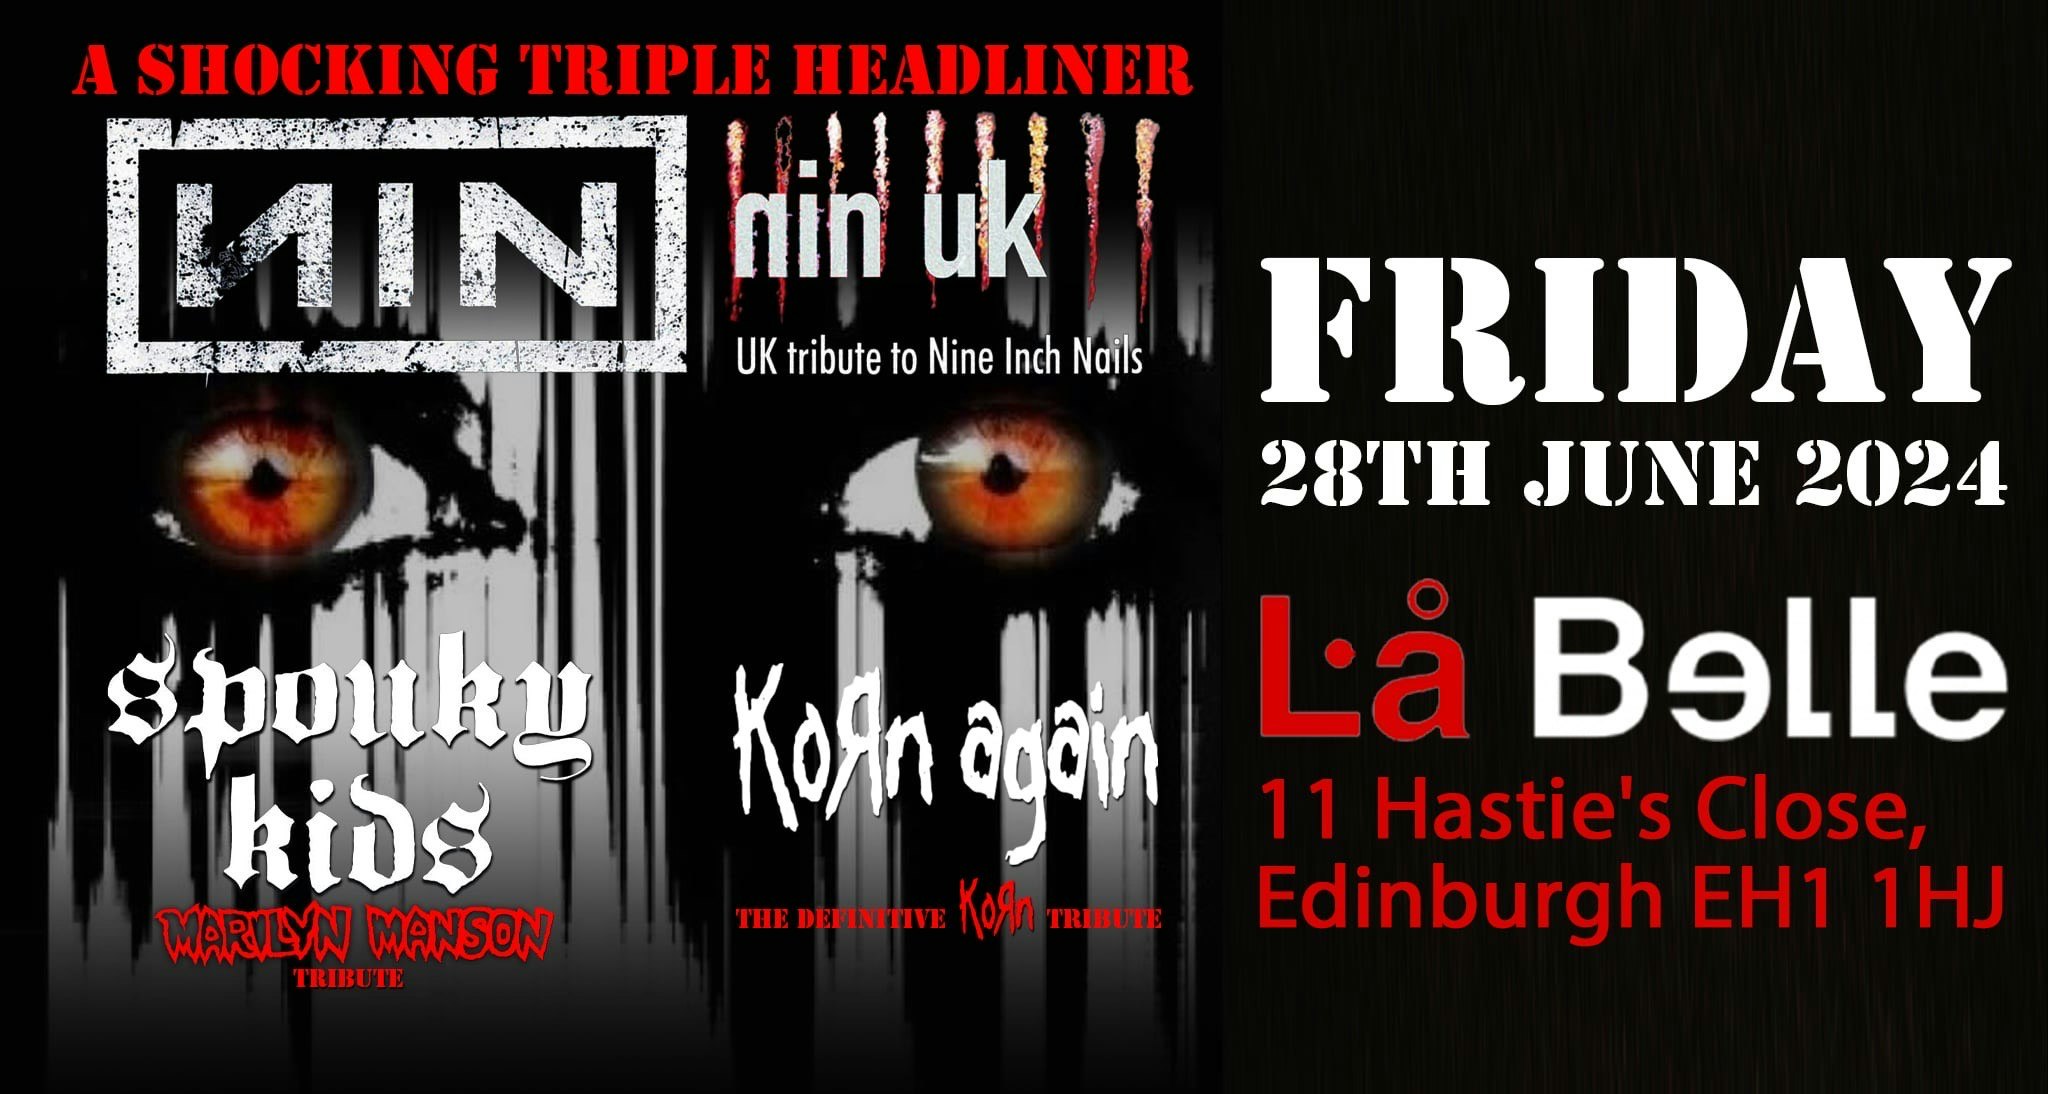 NIN UK + SPOUKY KIDS + KORN AGAIN – A Shocking Triple Headliner!